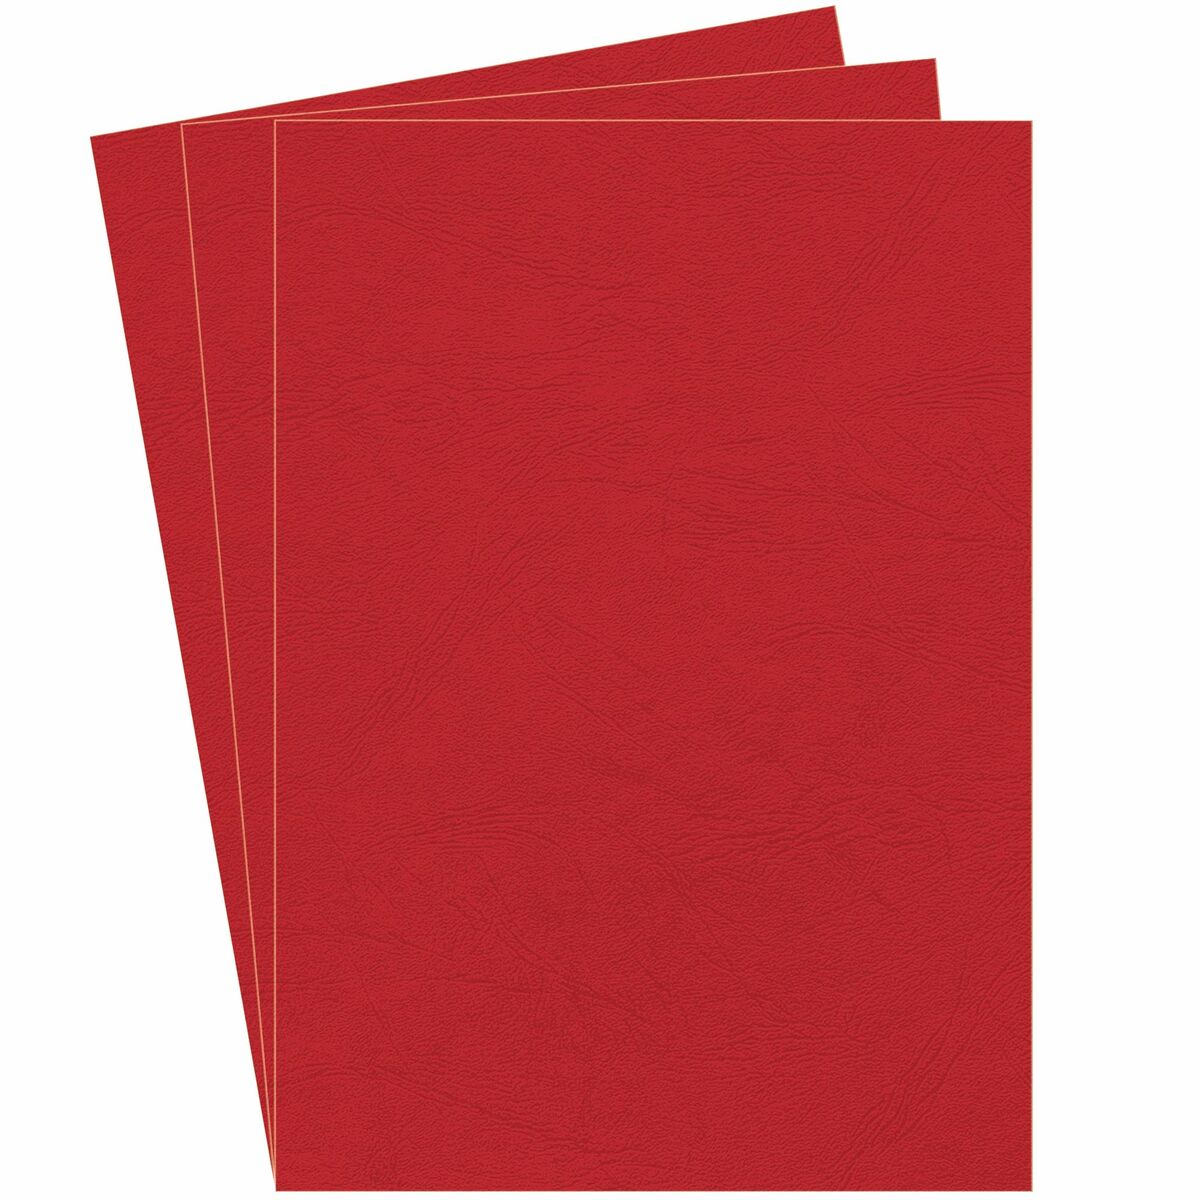 Binding Covers Fellowes Delta 100 Unități Roșu Închis A4 Carton